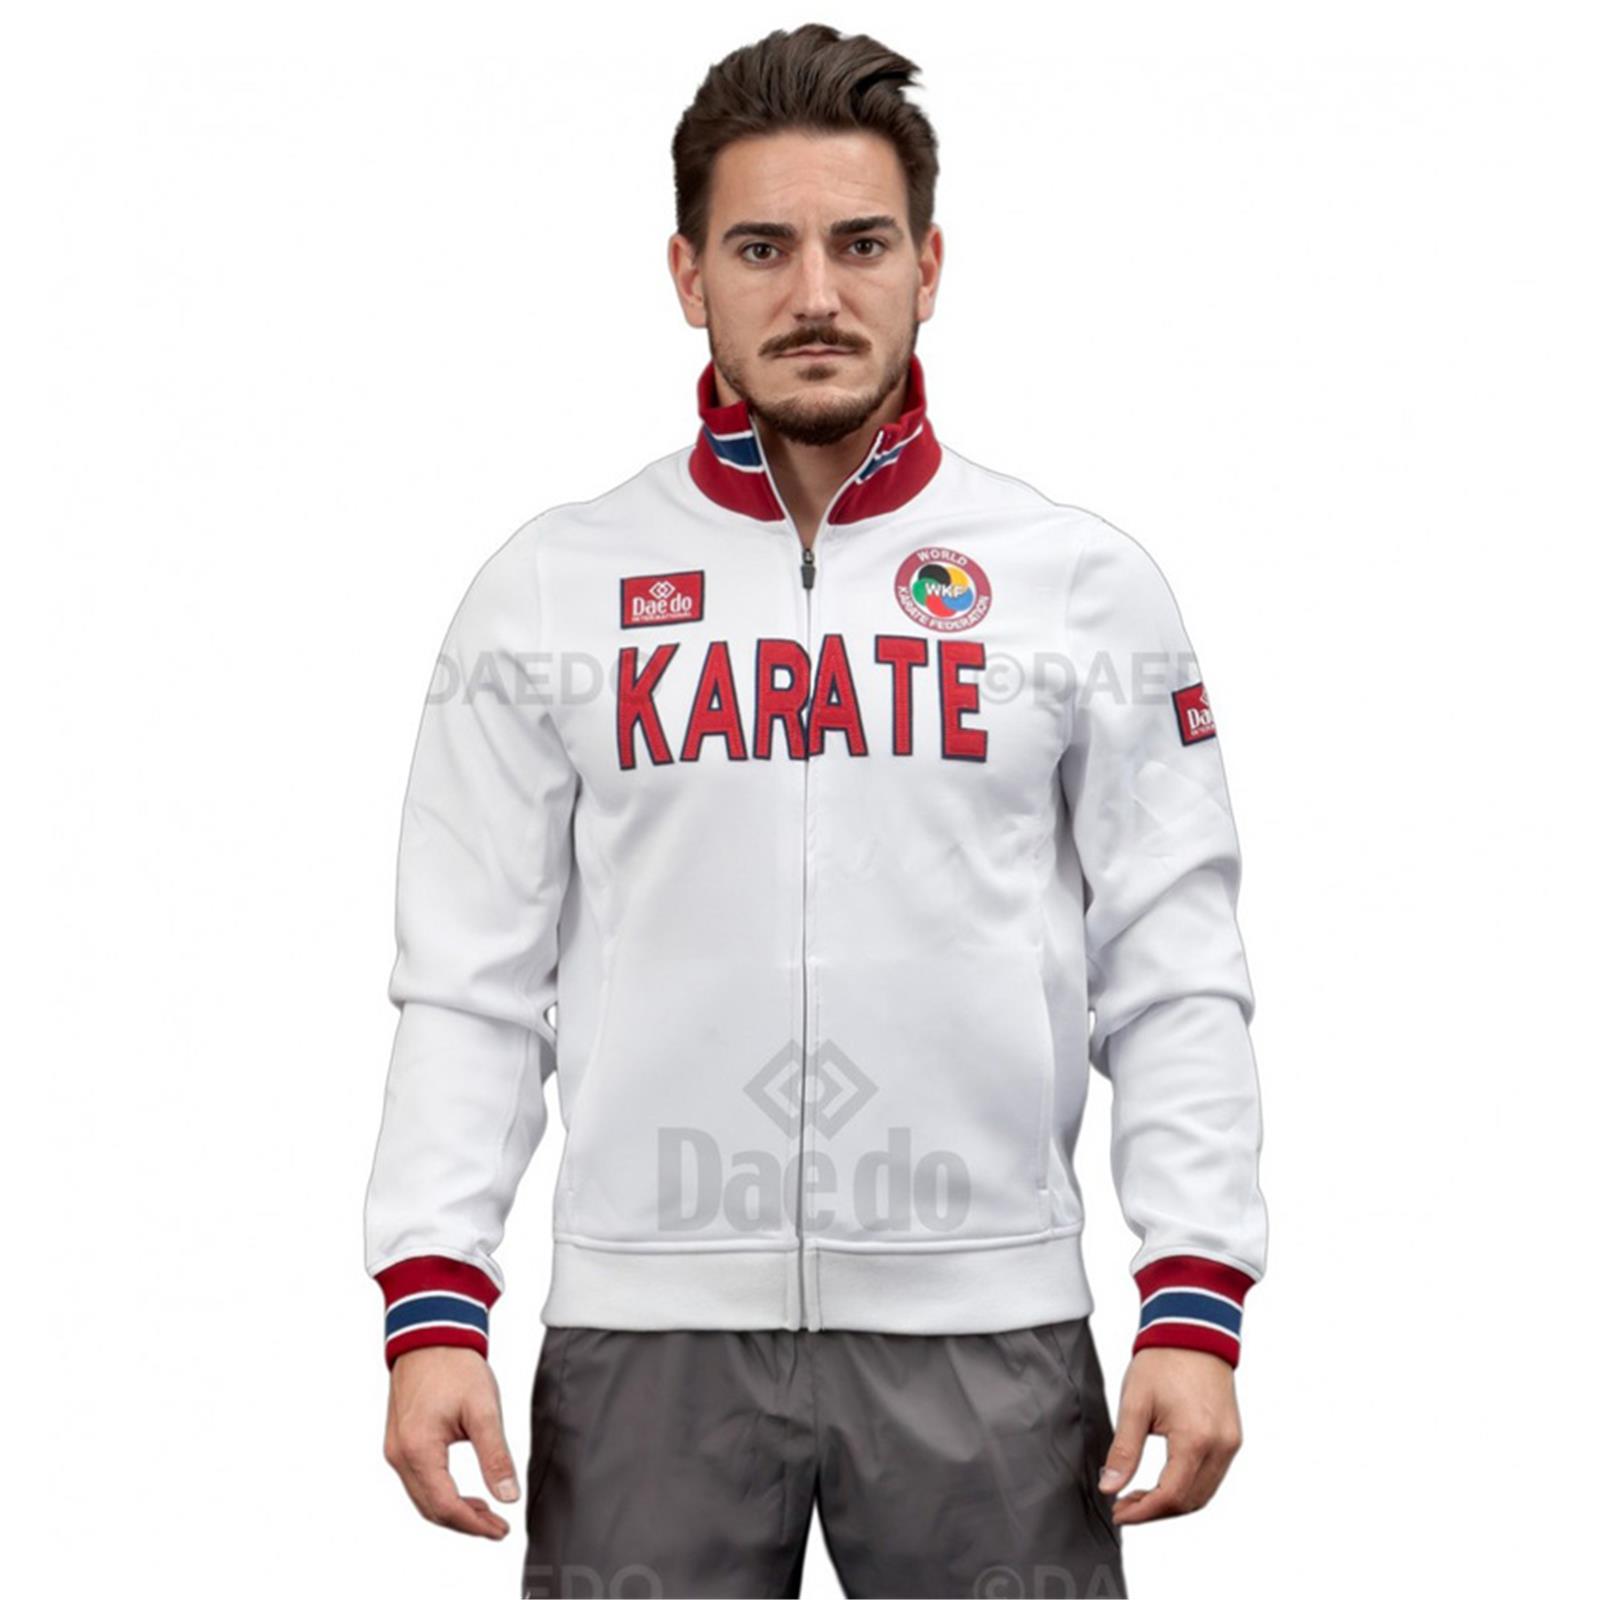 Dae Do Felpa Sportiva Karate slim jacket bianca (XL - BIANCO)